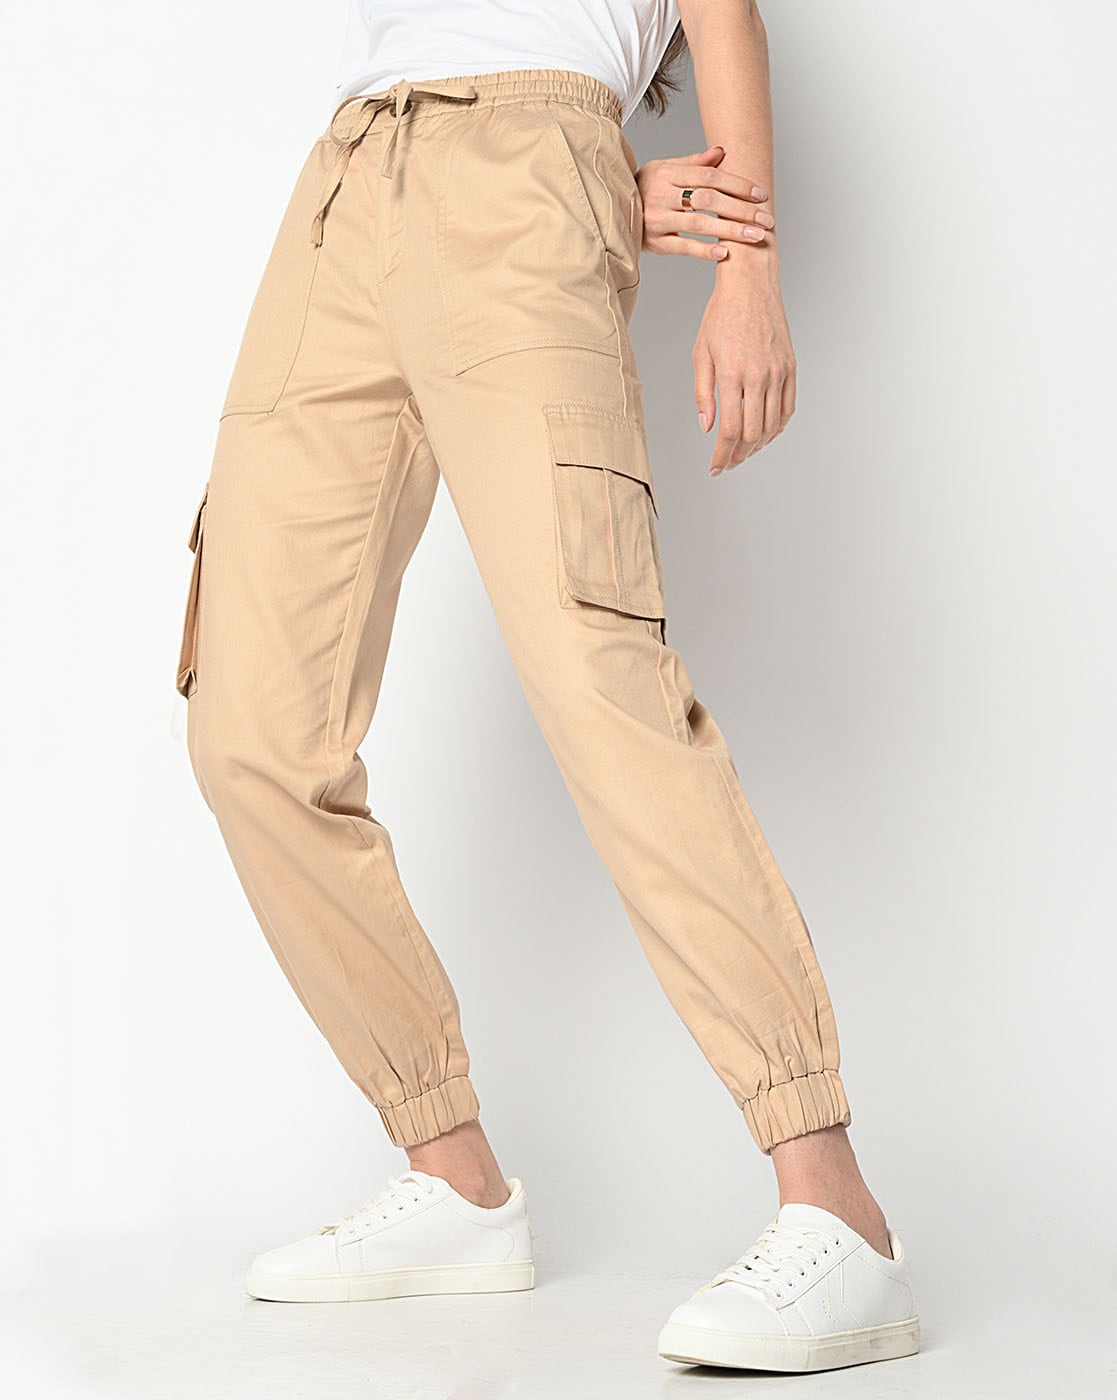 Casual Plain Cargo Pants Khaki Women's Pants (Women's), 47% OFF